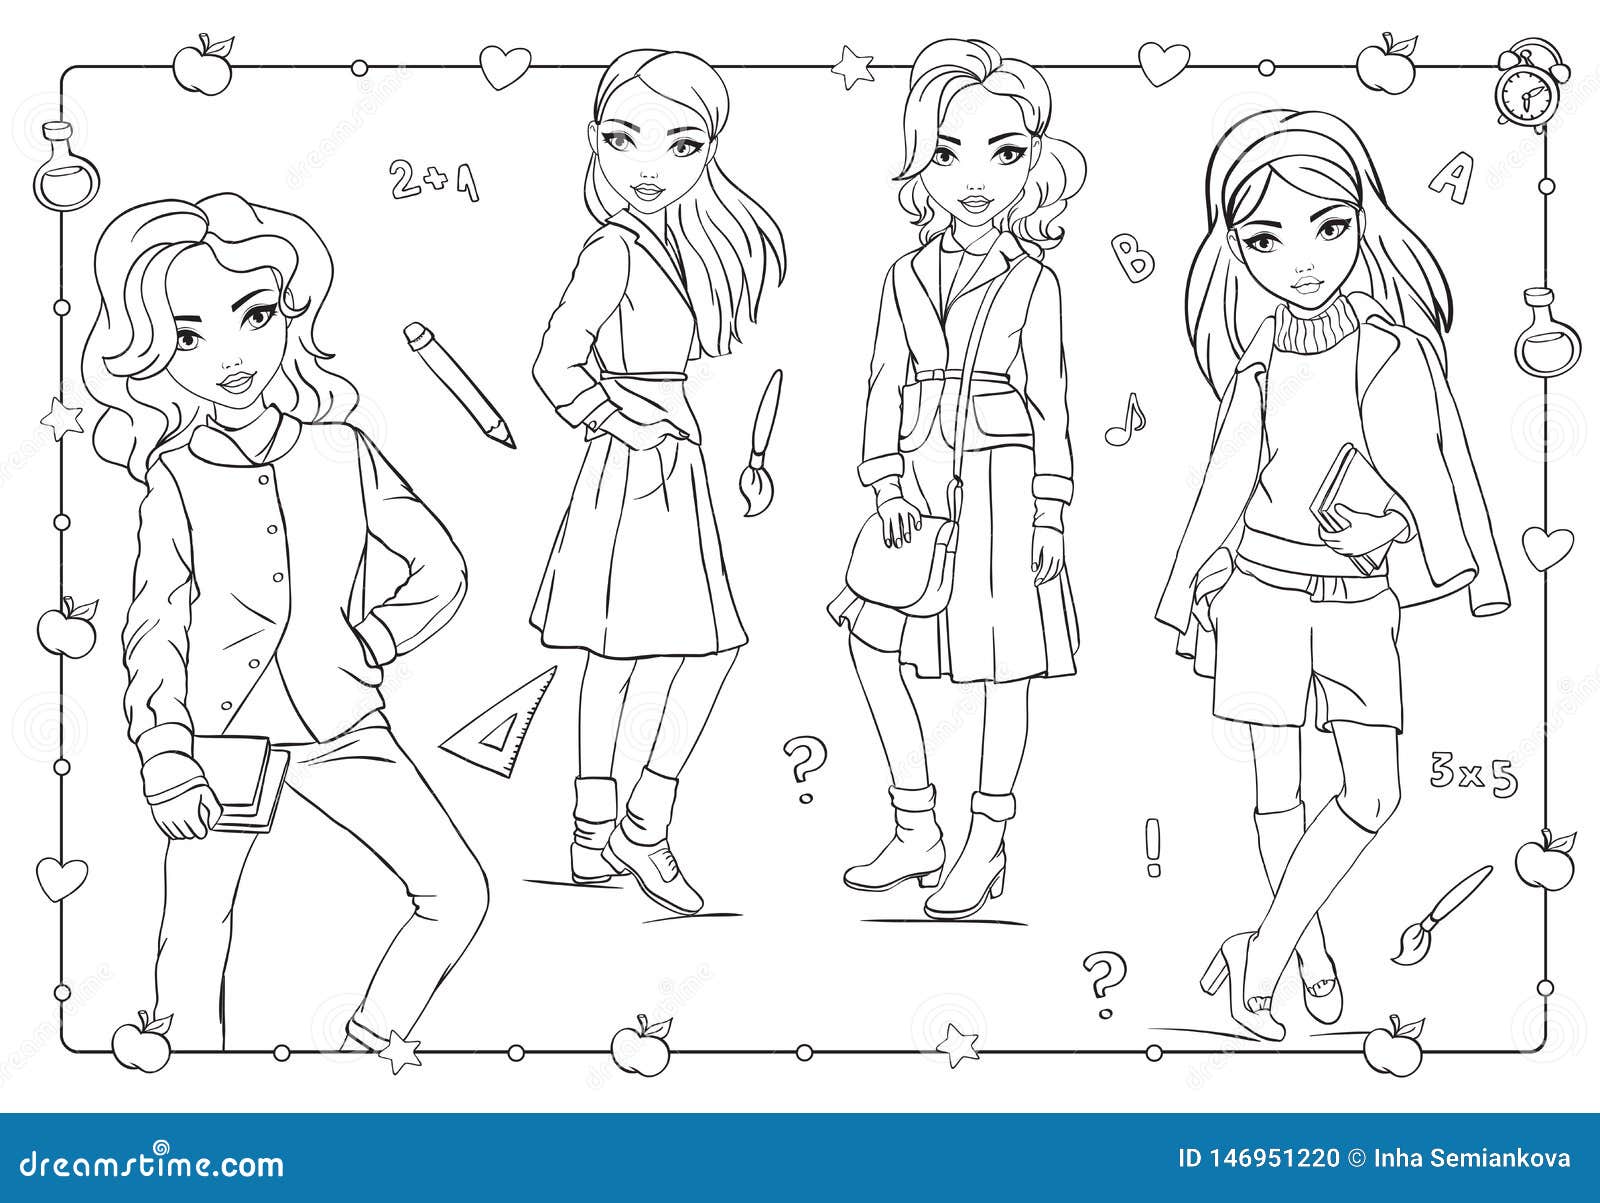 https://thumbs.dreamstime.com/z/coloring-book-girls-school-uniform-dresses-vector-beautiful-fashion-146951220.jpg